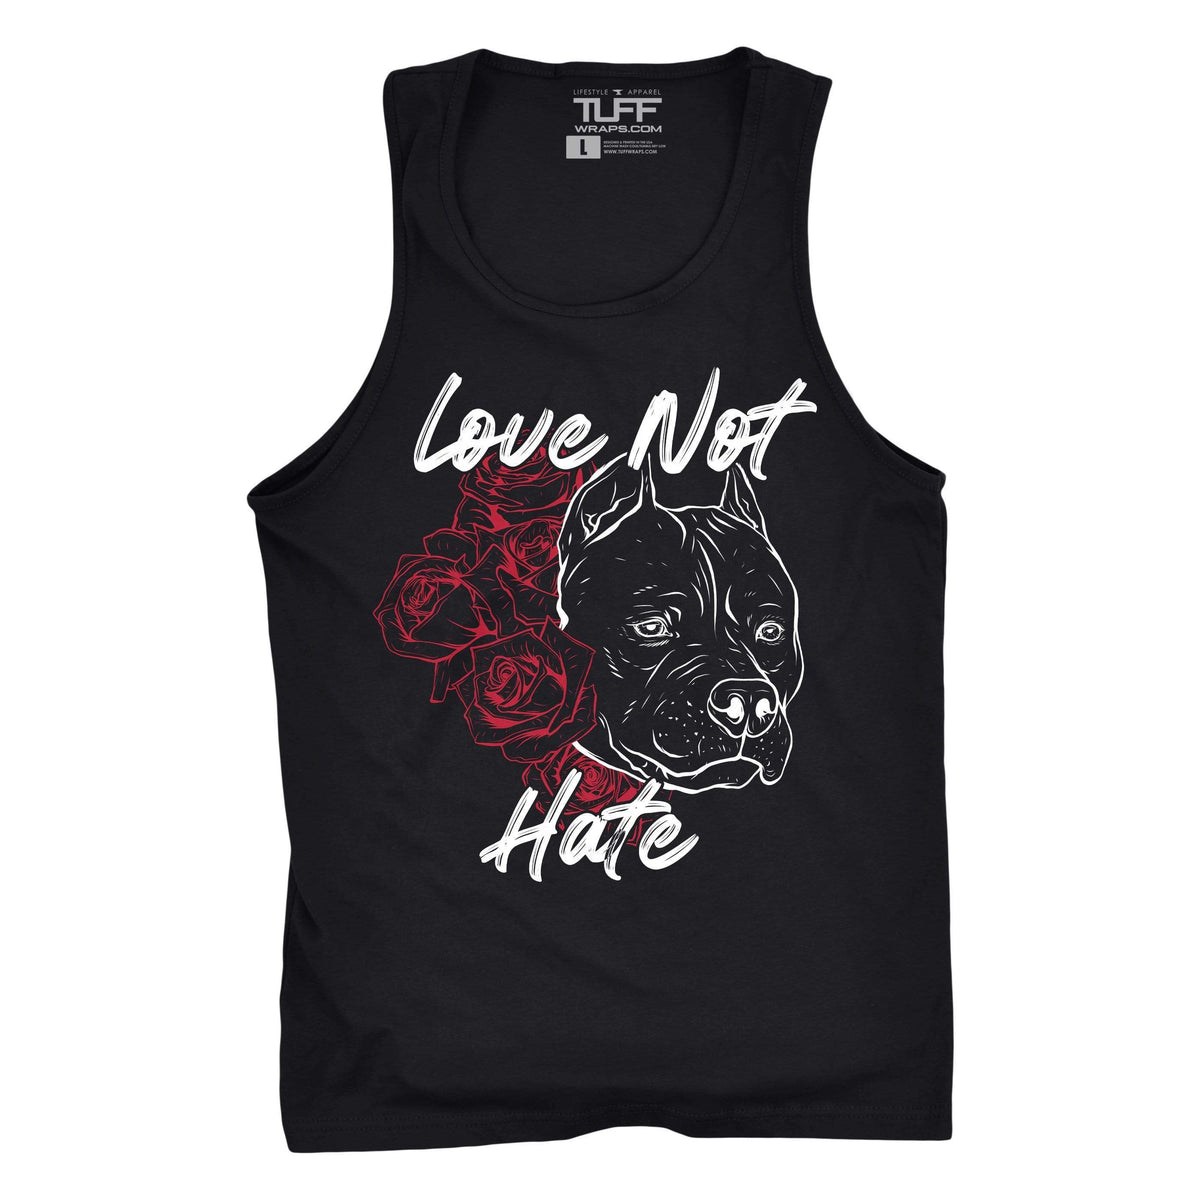 Love Not Hate Tank S / Black TuffWraps.com